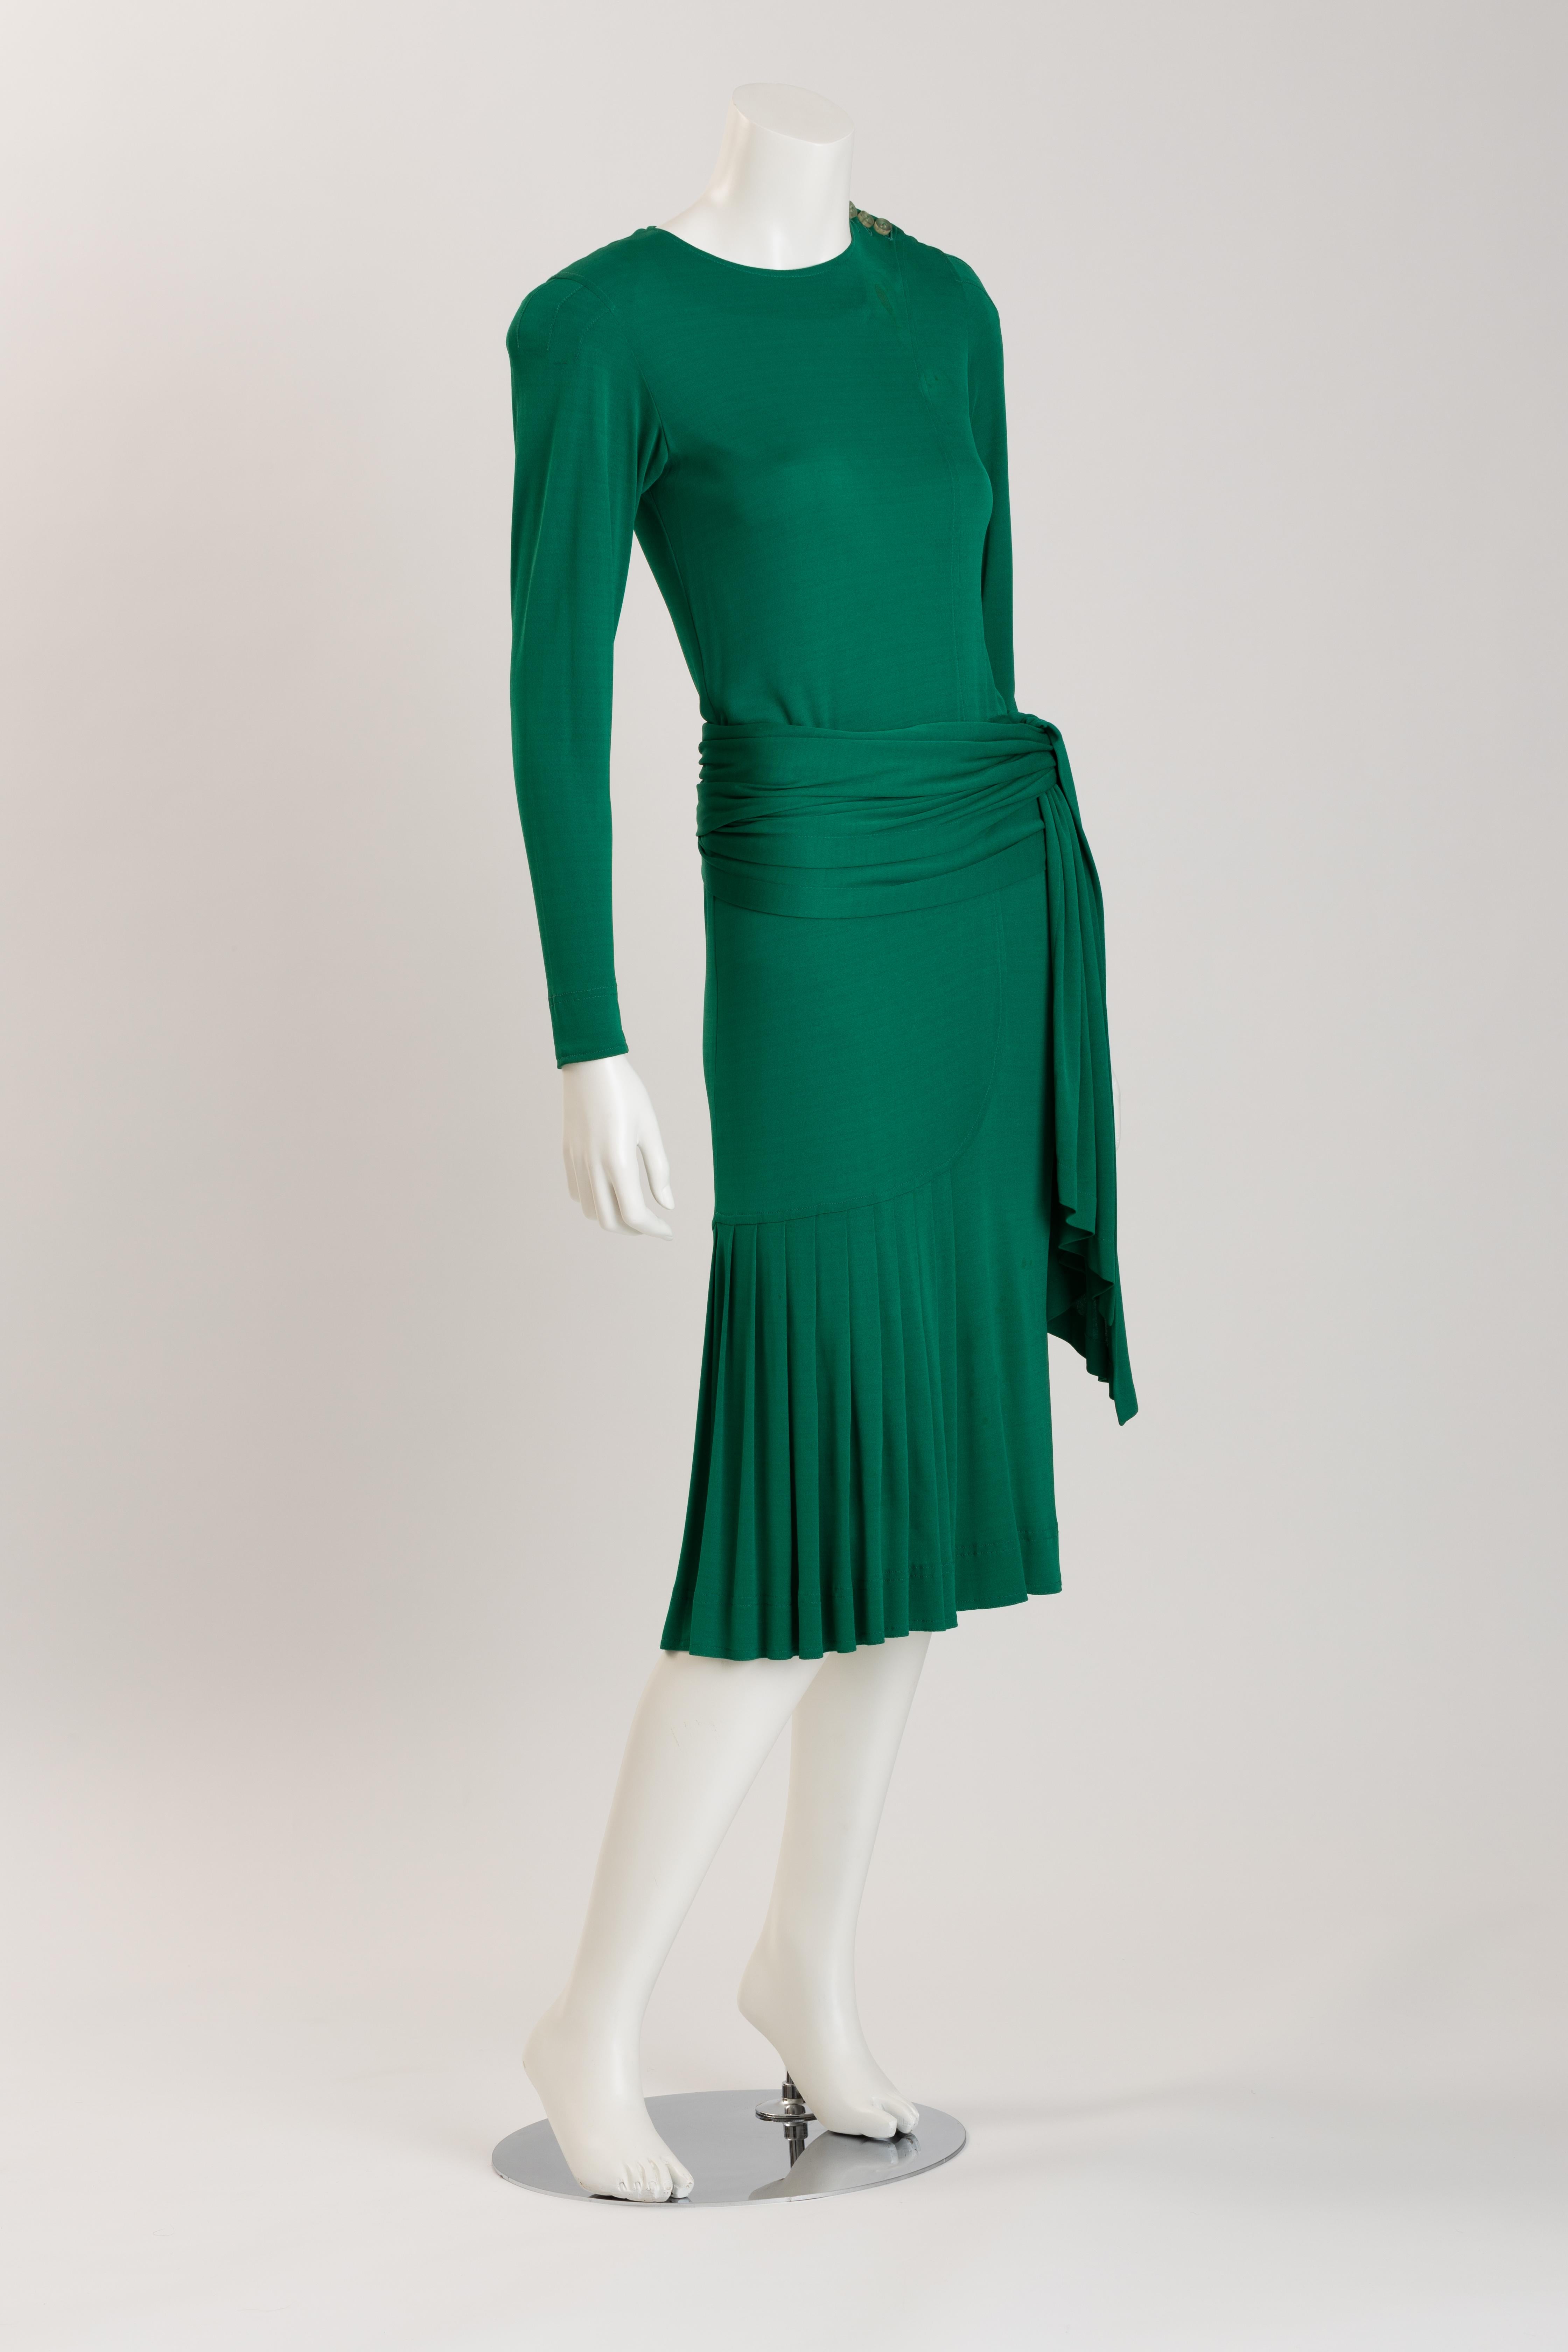 Jean Muir Emerald Green Viscose Jersey Cocktail Dress For Sale 1